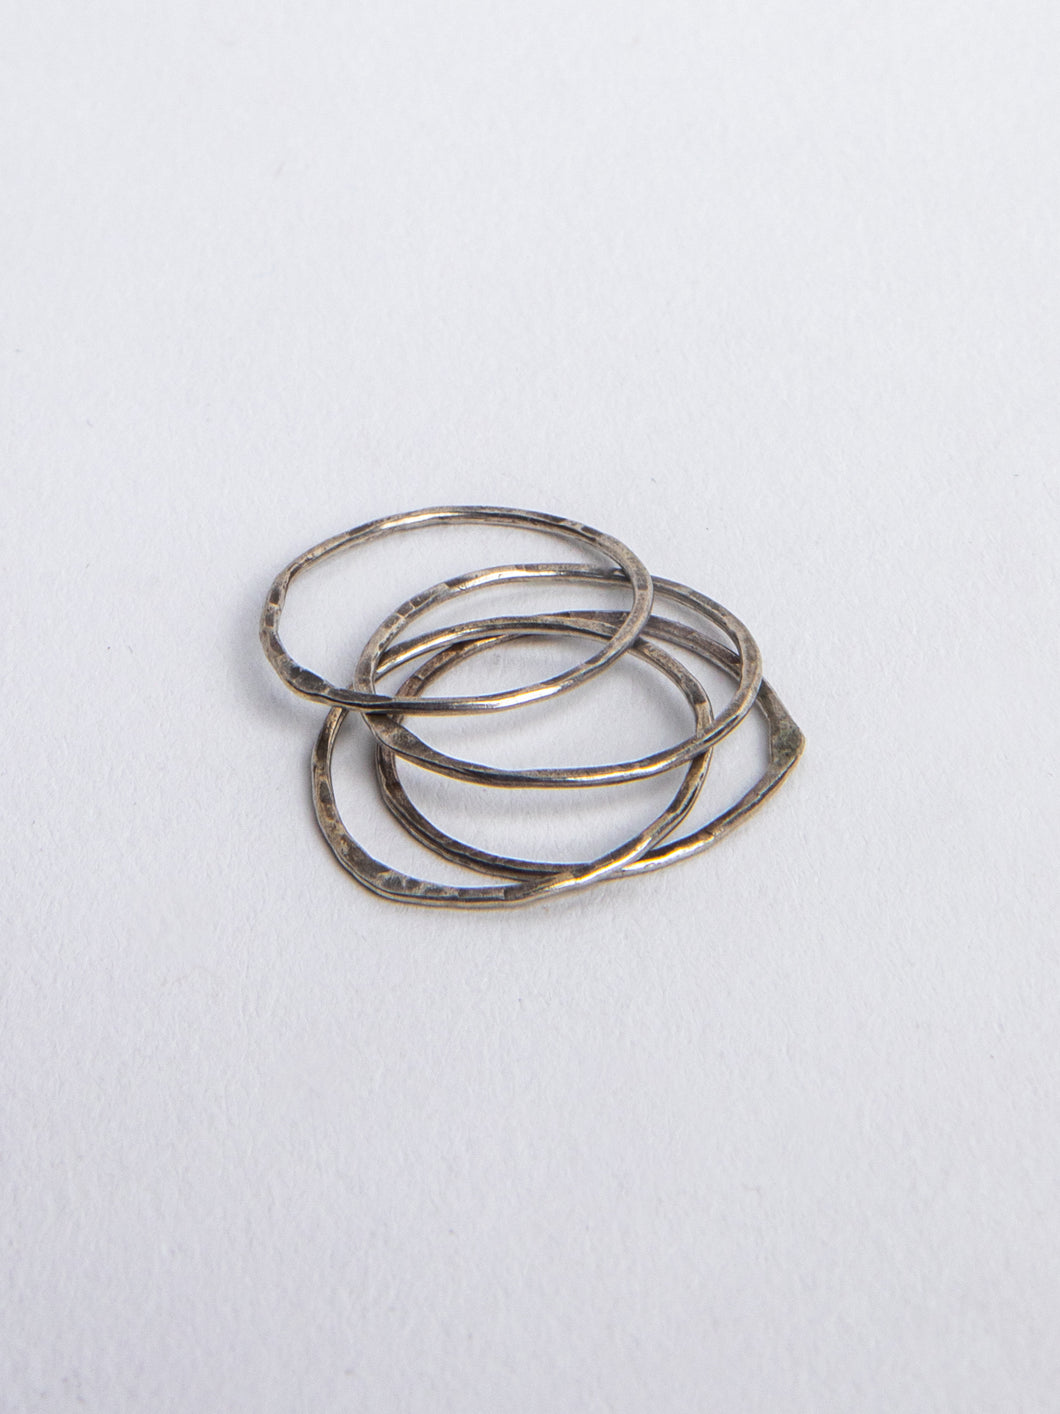 Handmade Silver Ring Stack